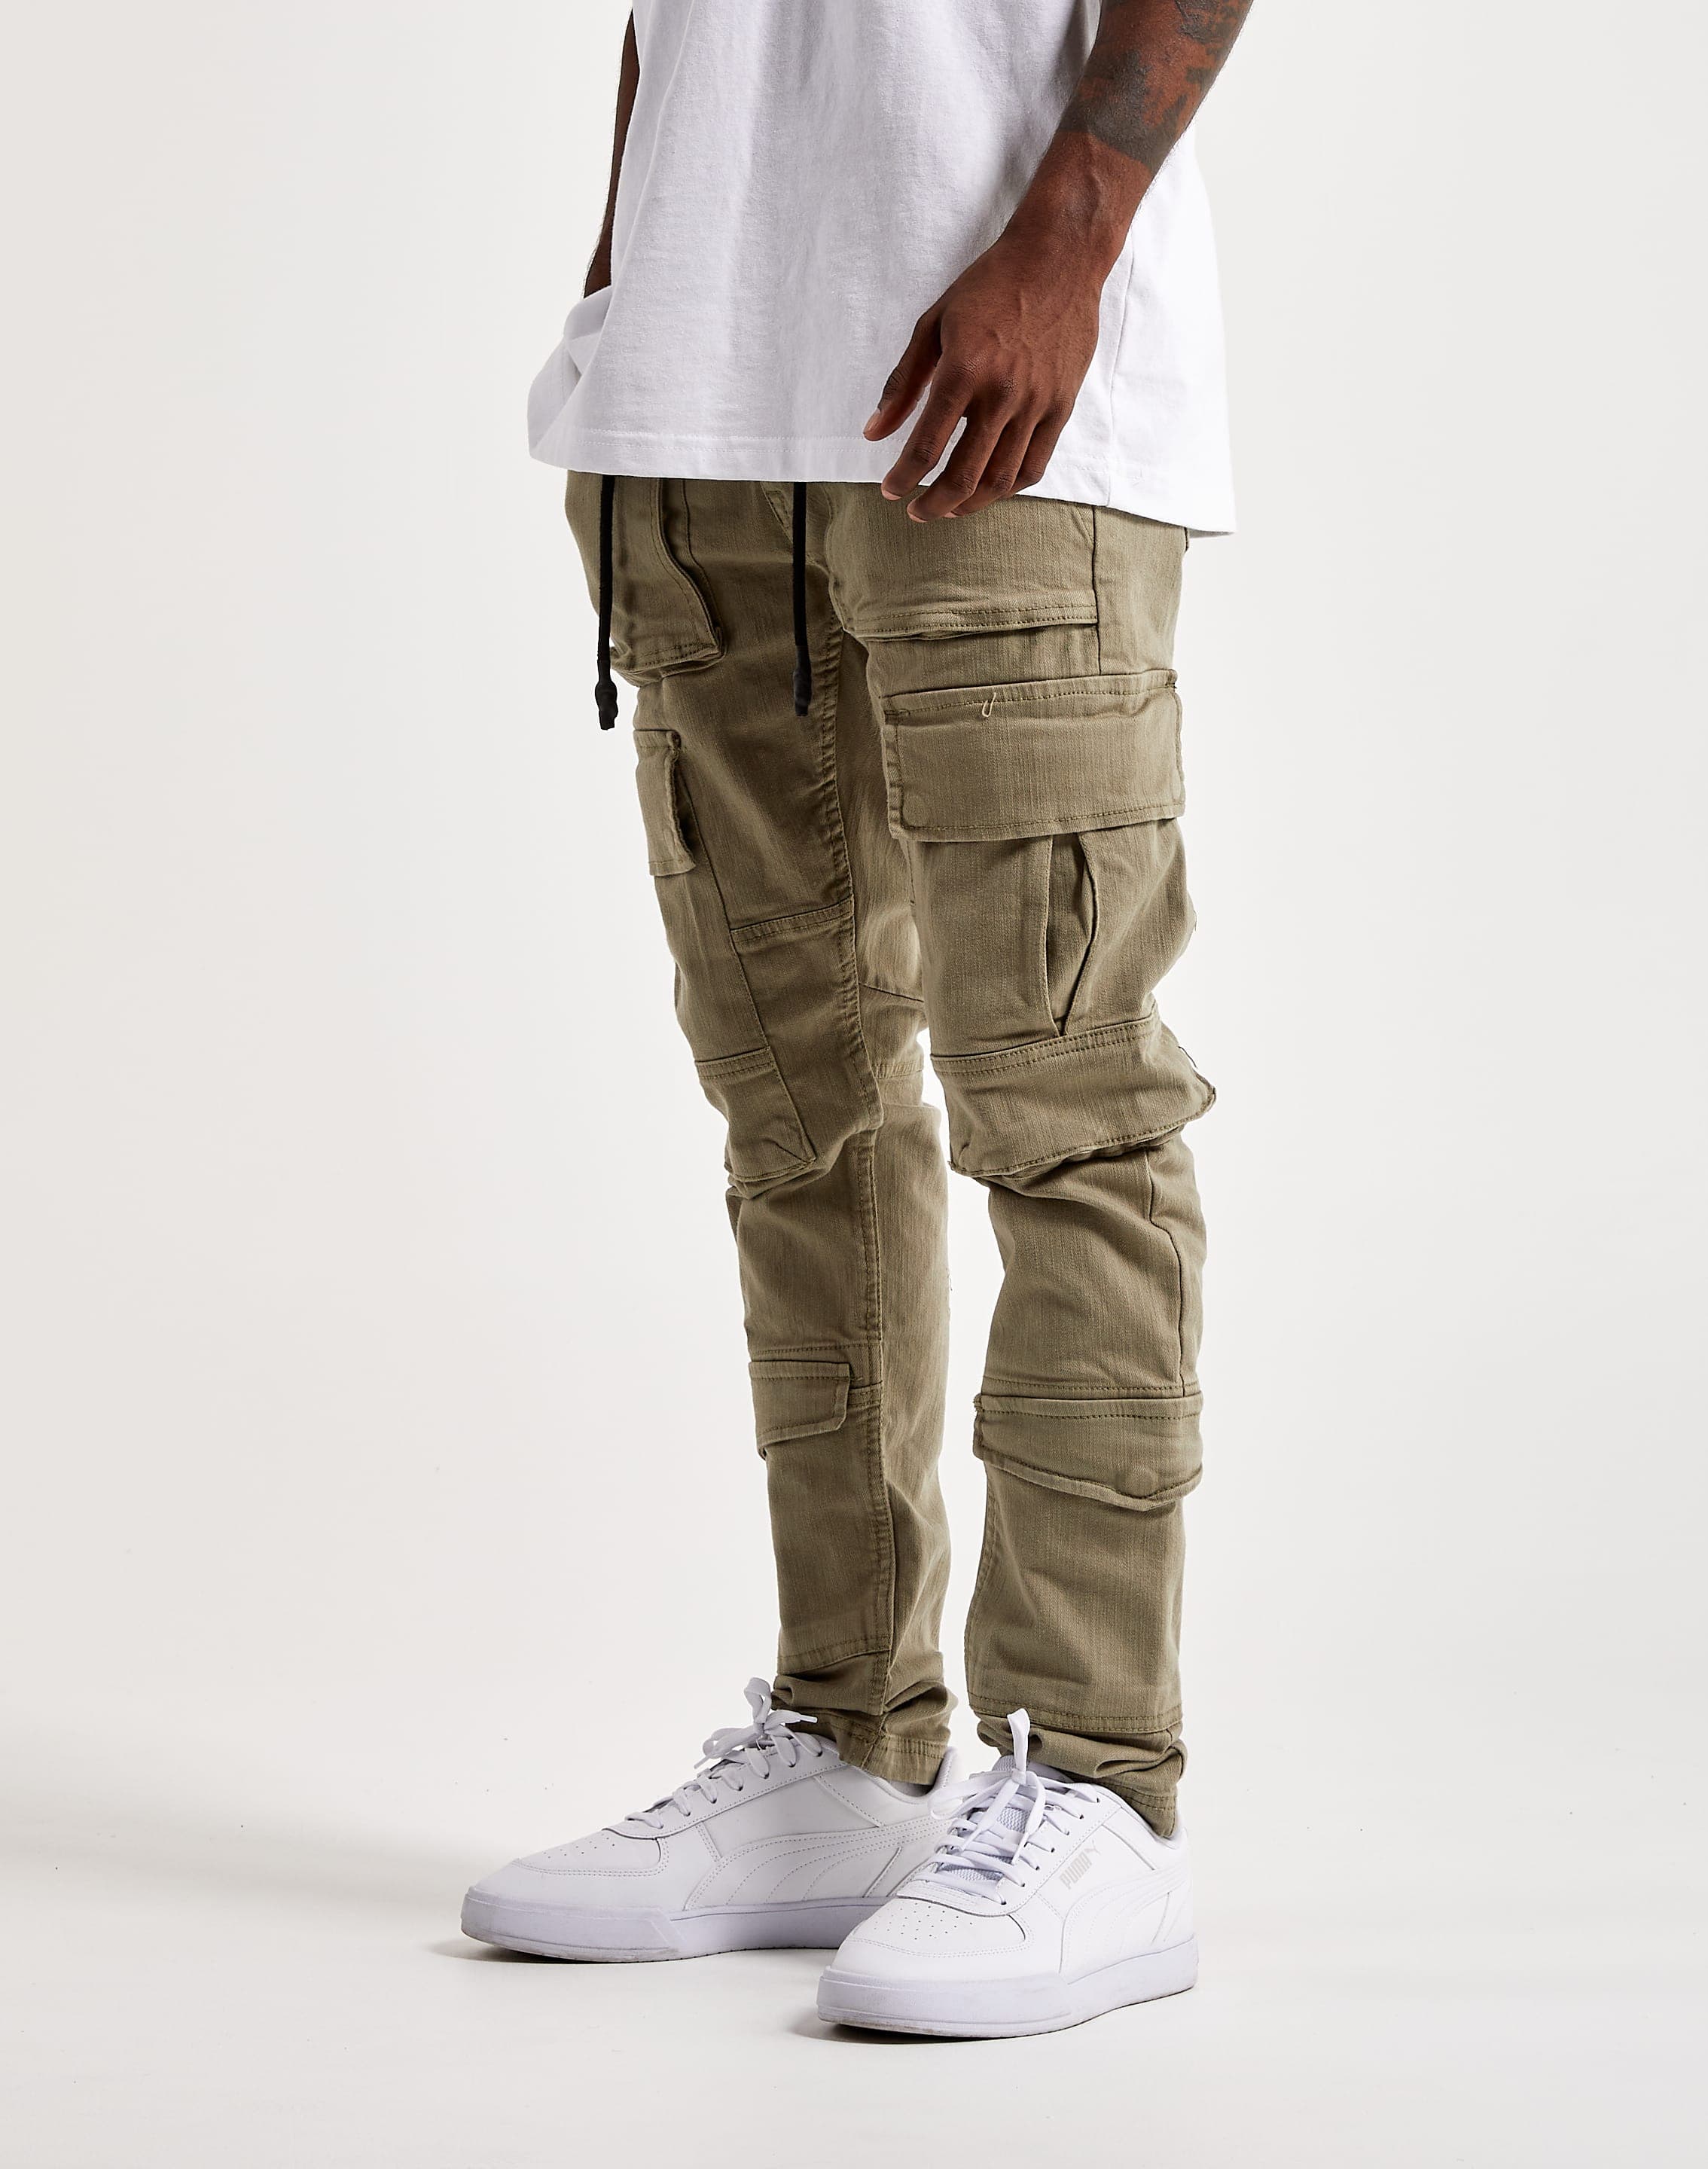 Nike Jordan: Black 23 Engineered Cargo Pants | SSENSE Canada